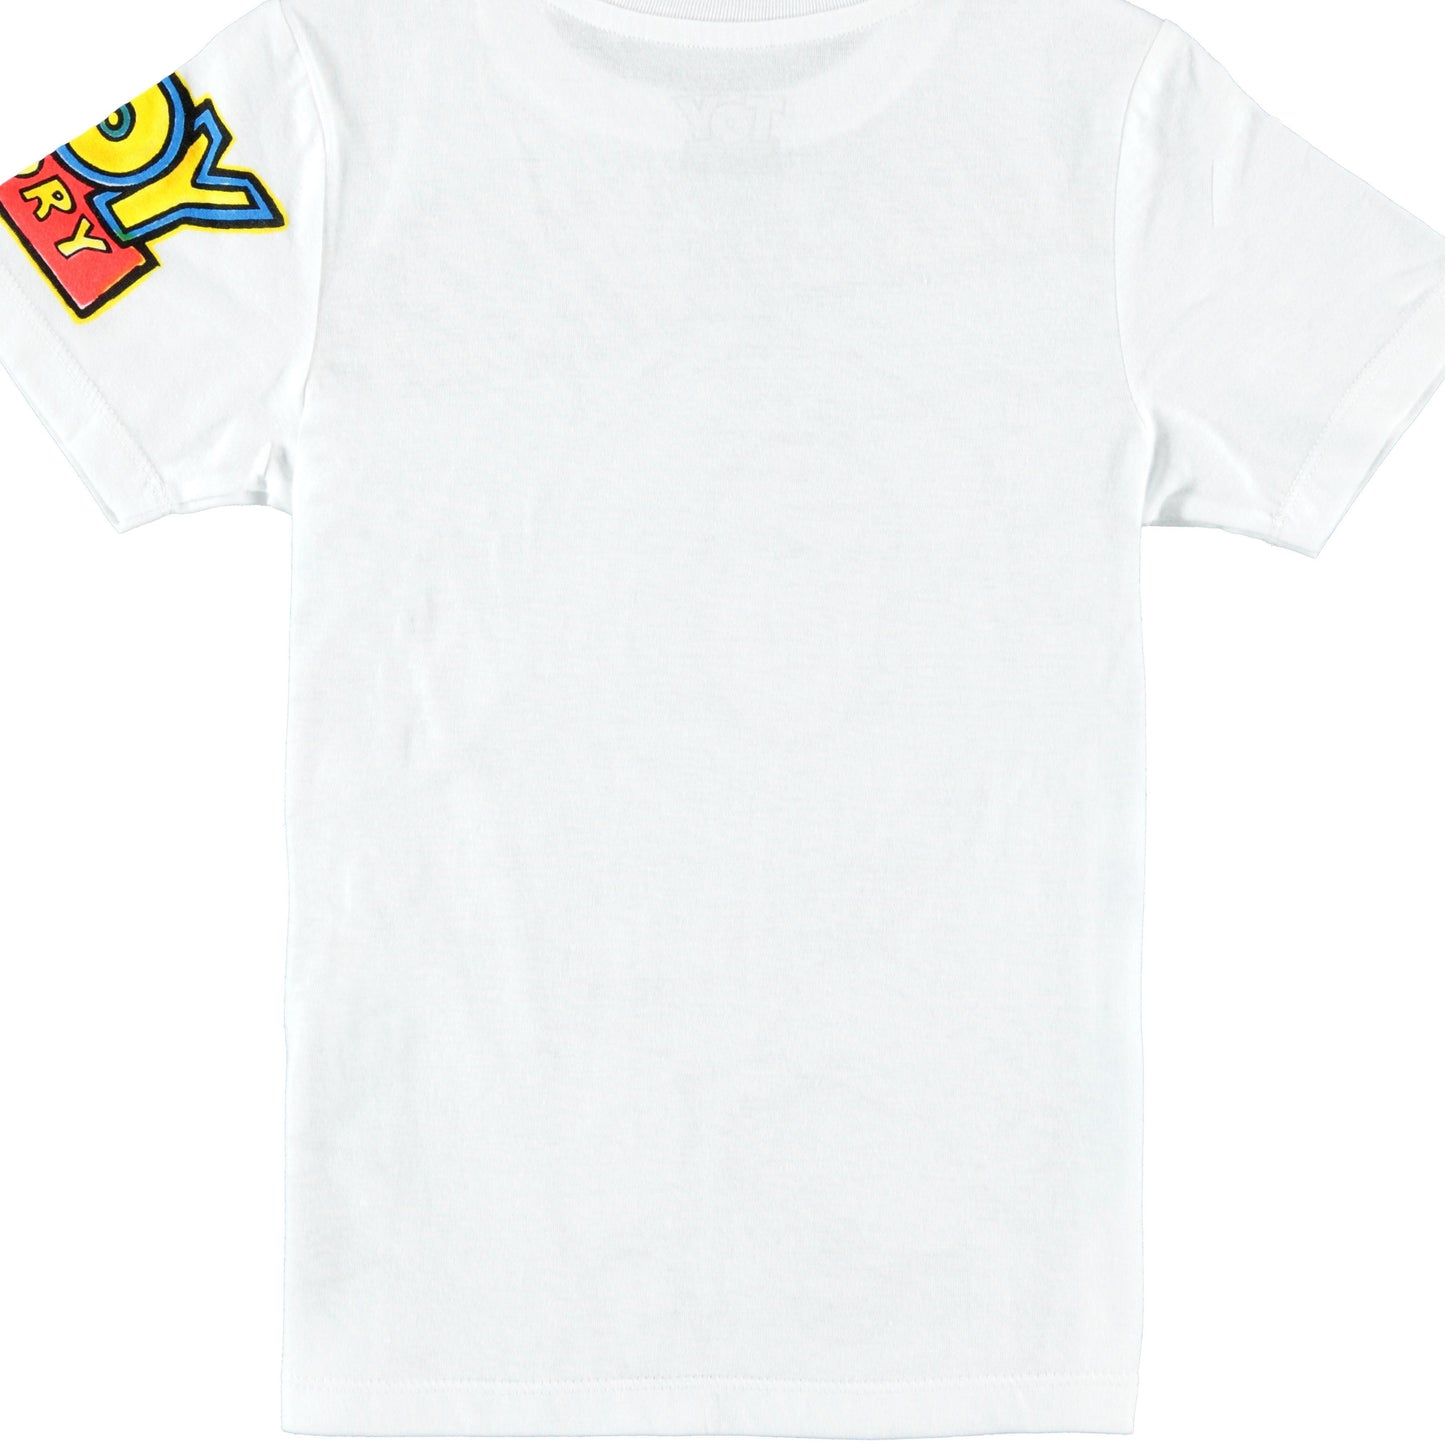 Disney Toy Story Boys Buzz Lightyear T-Shirt - Air Brushed Design Toy Story Boys T-Shirt